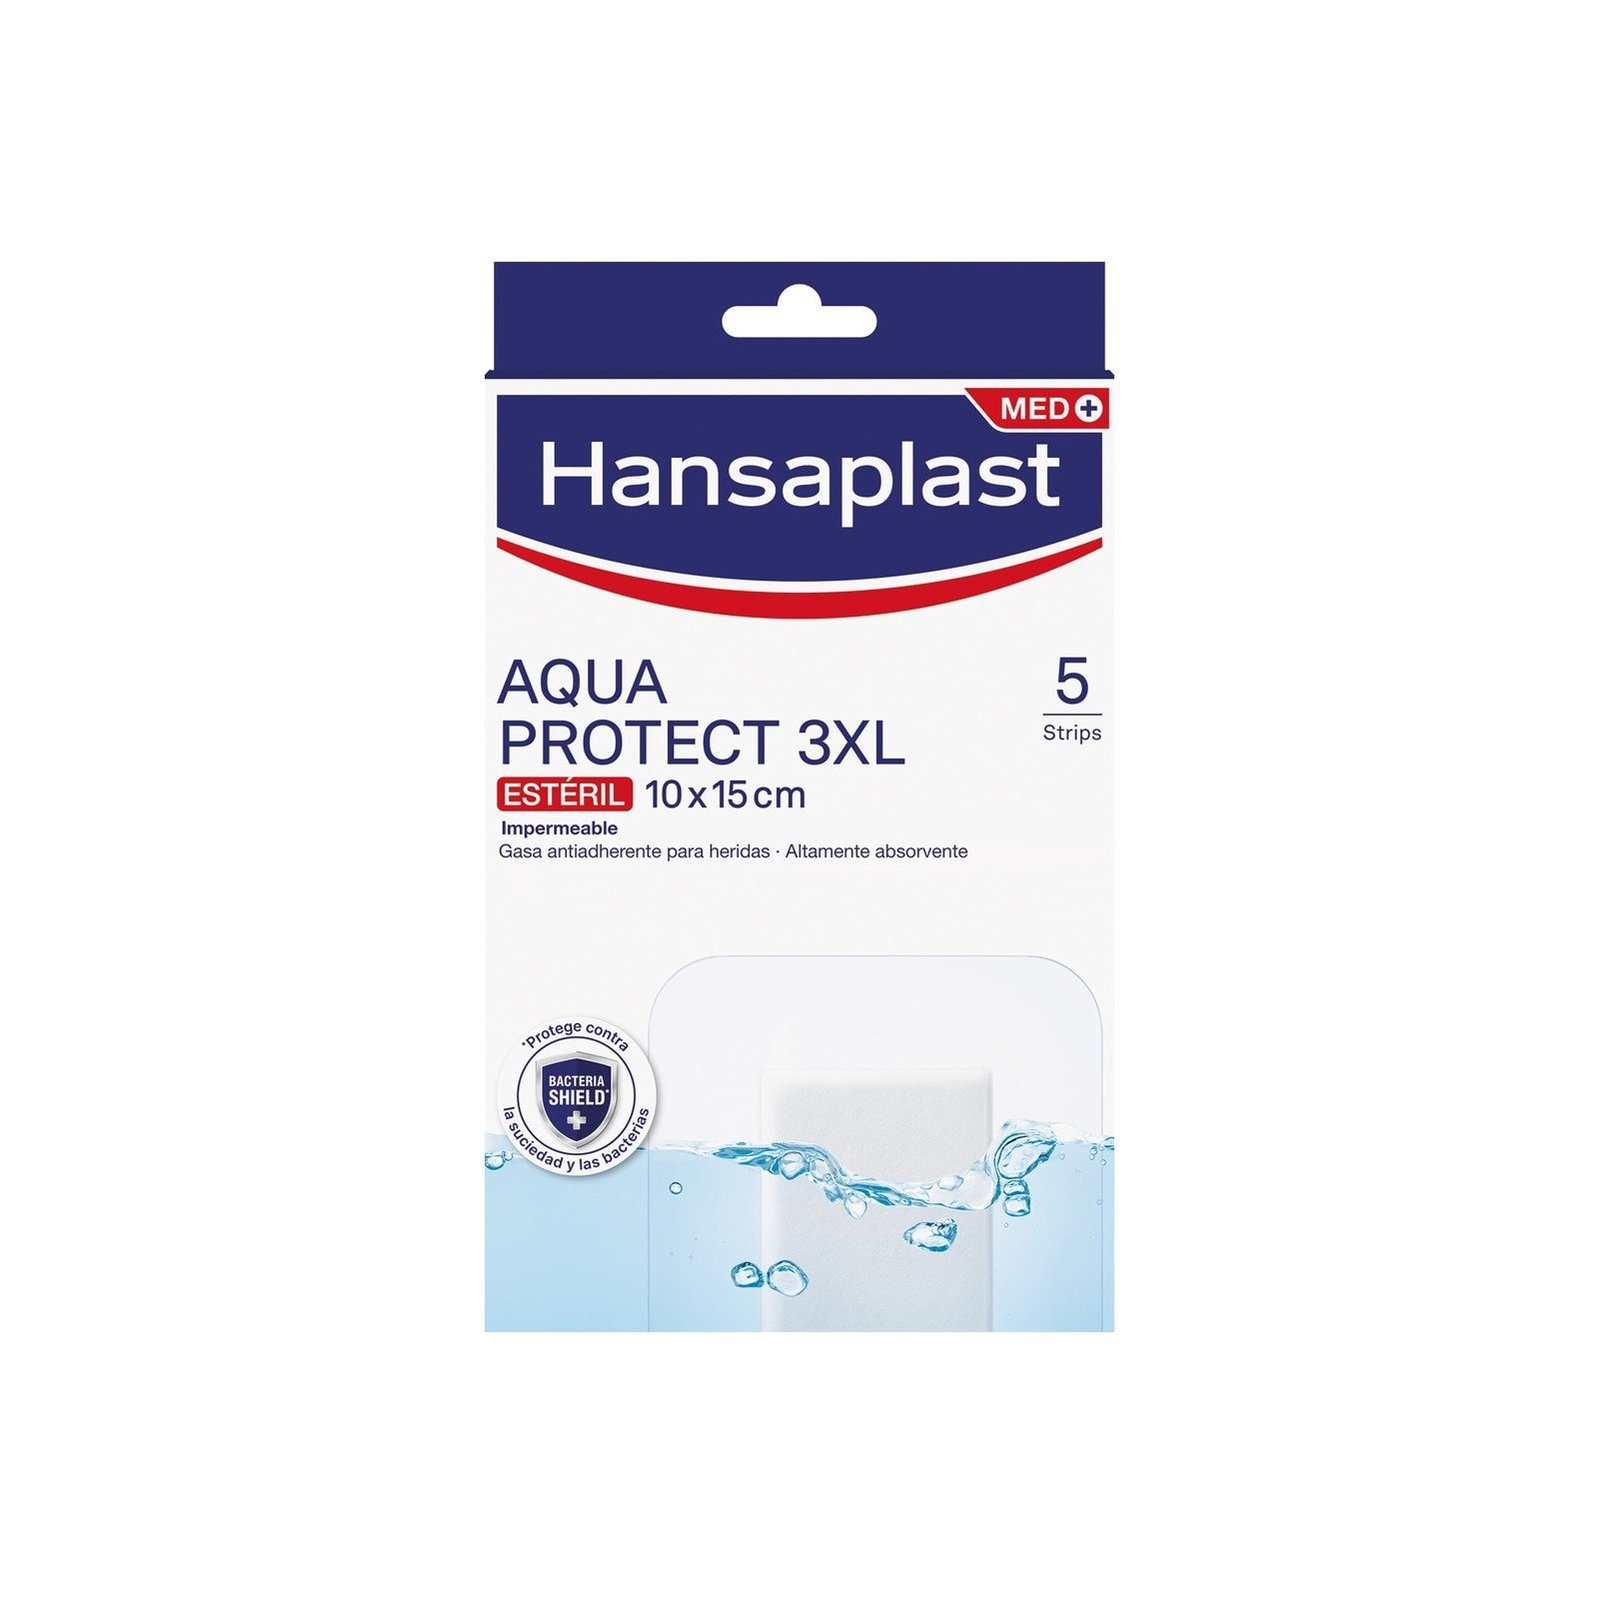 Hansaplast Med+ Aqua Protect 3XL Sterile Plasters x5